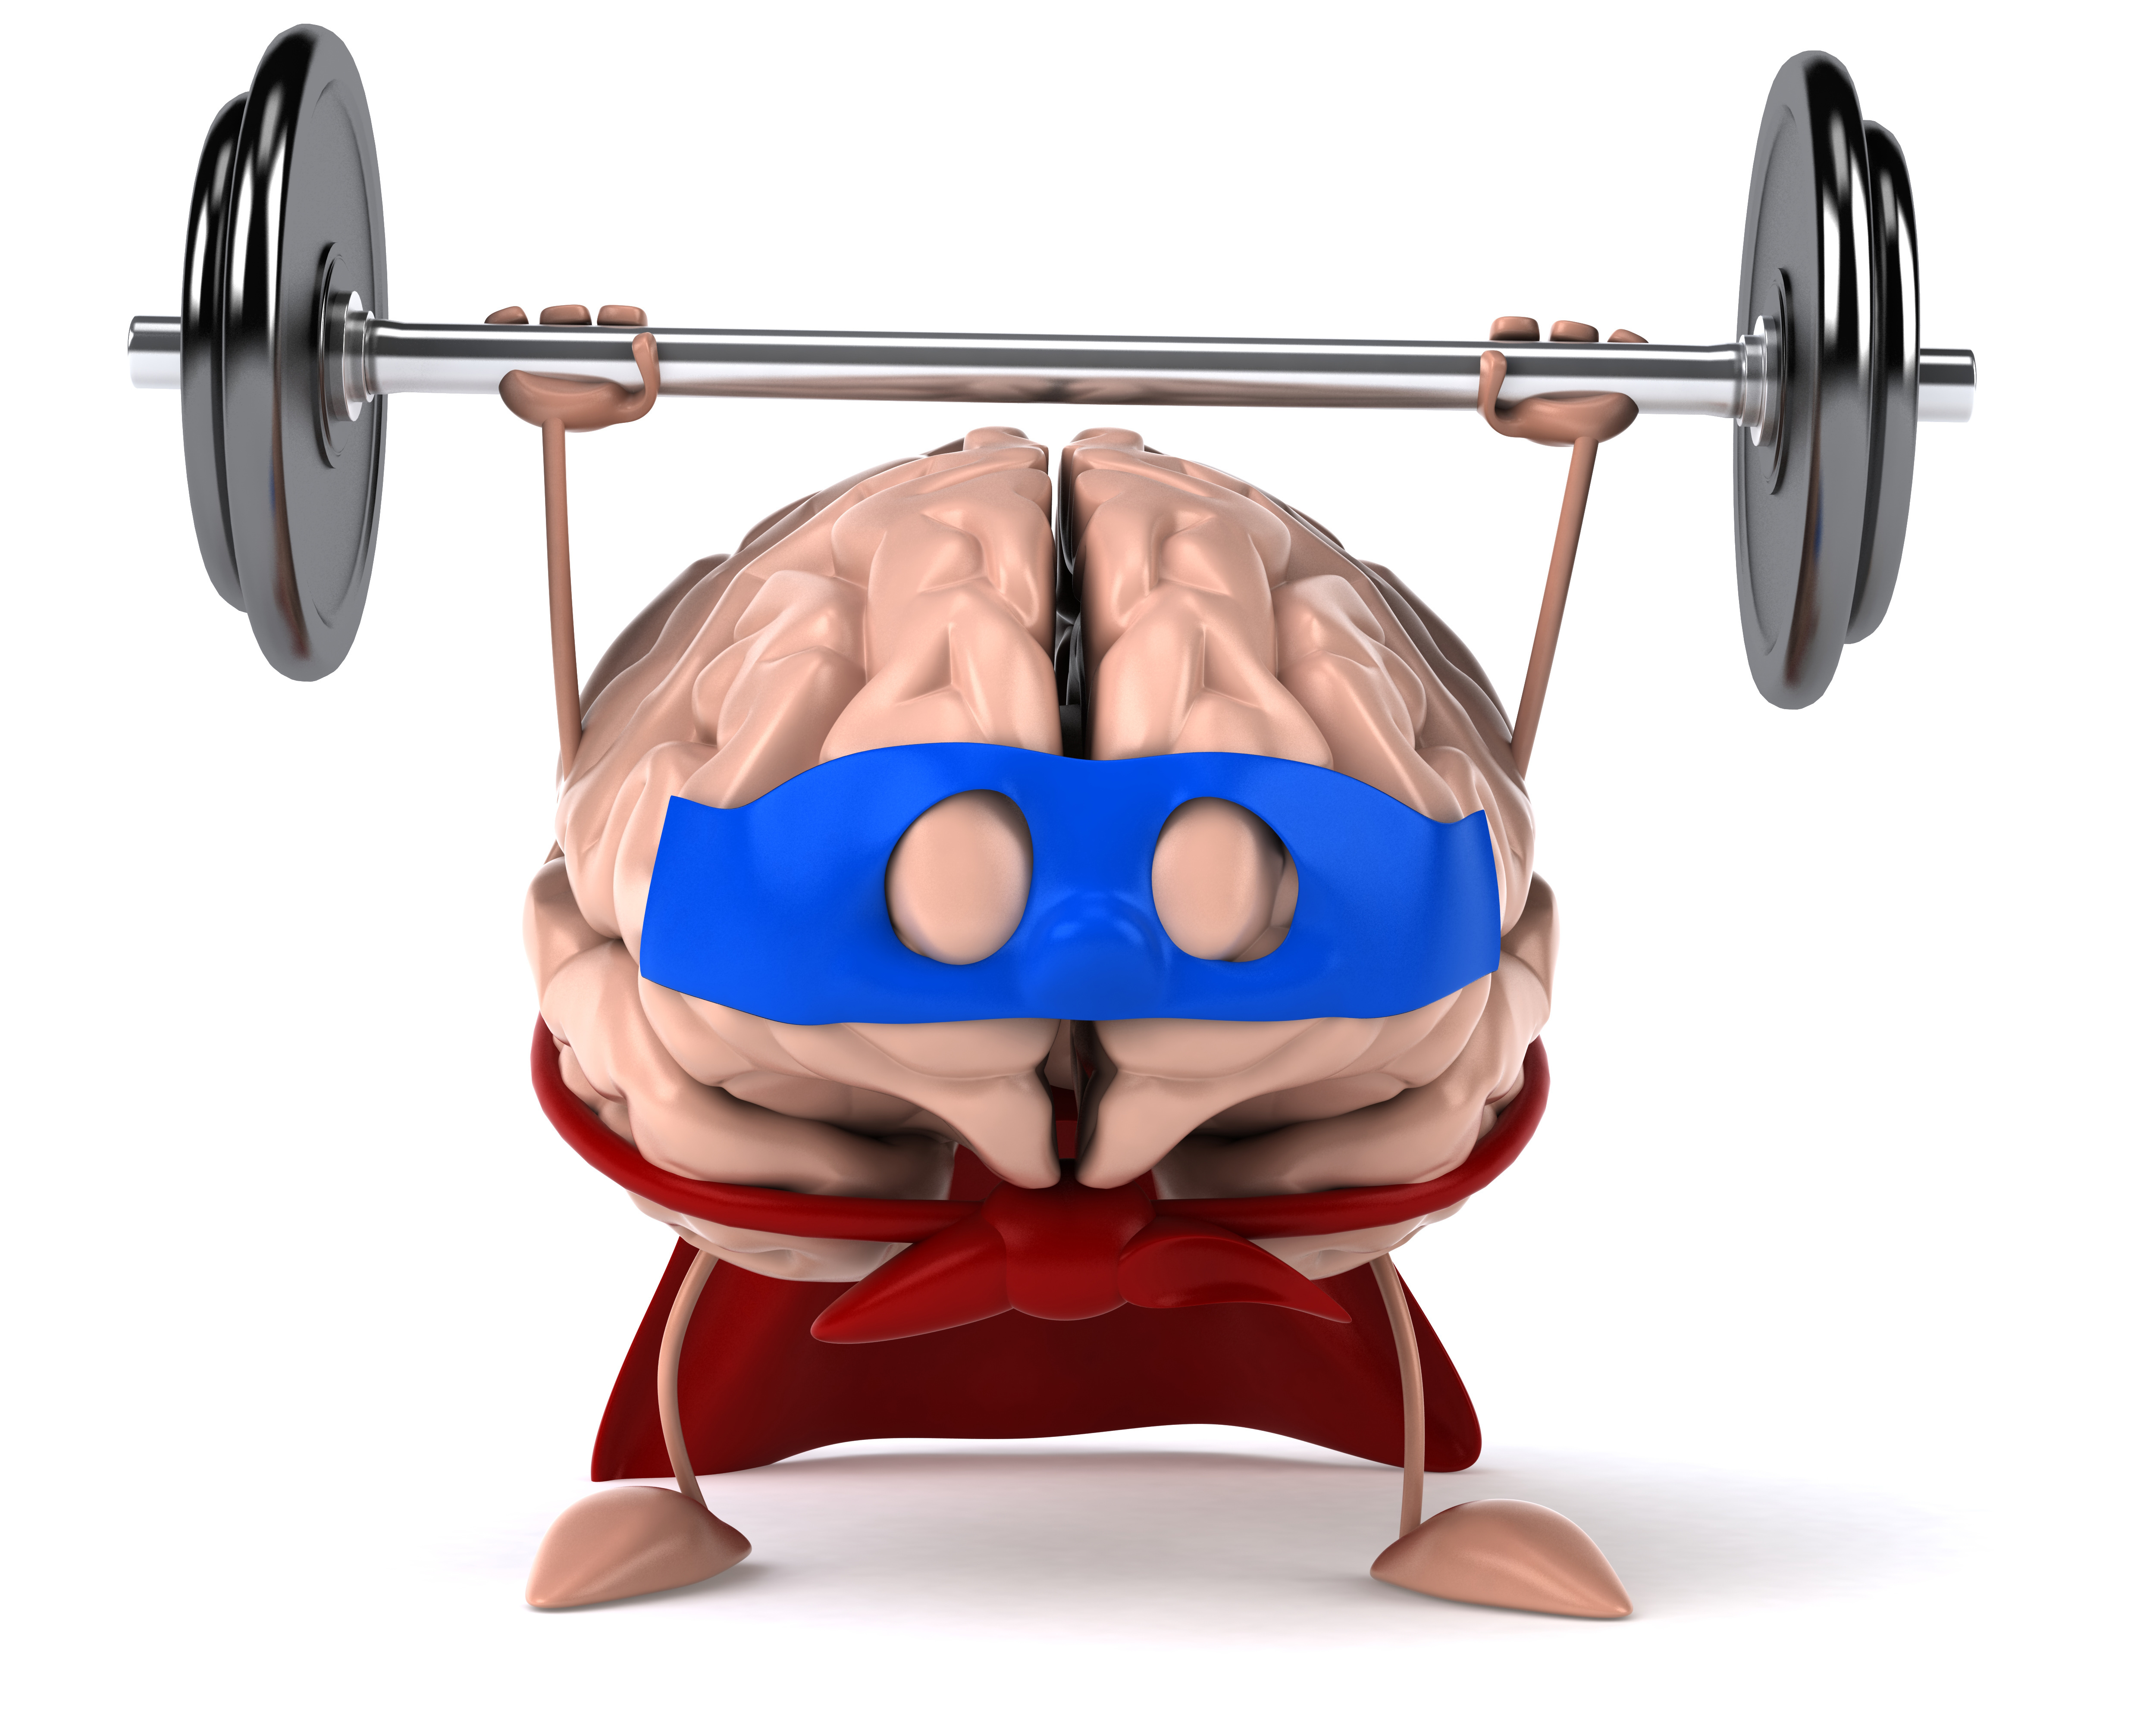 brain gym exercise video